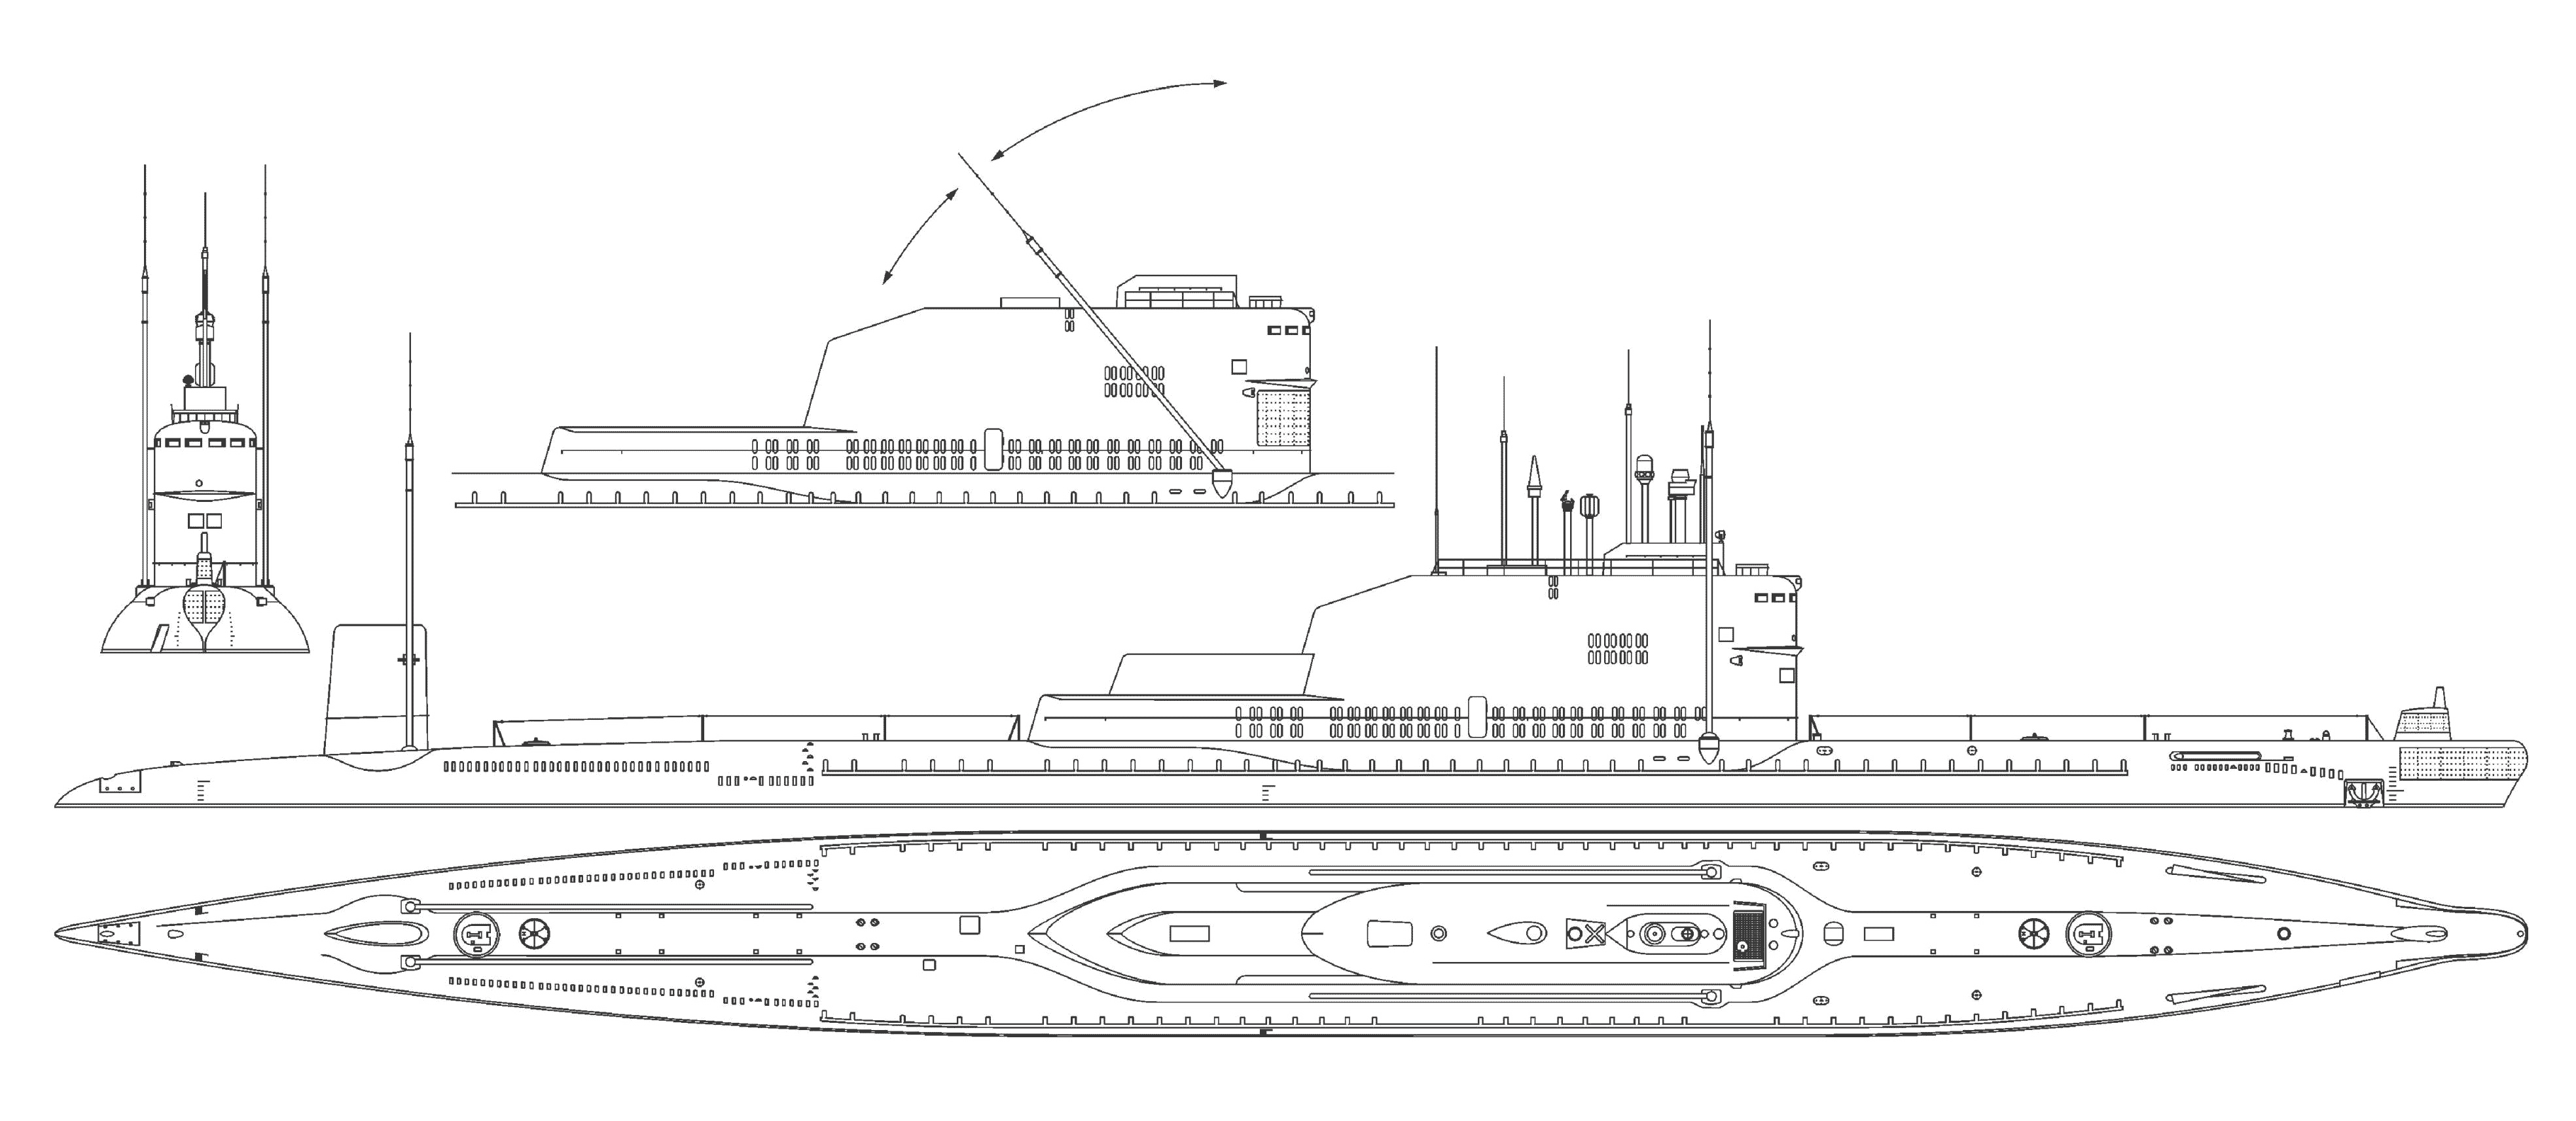 Golf-class submarine blueprint